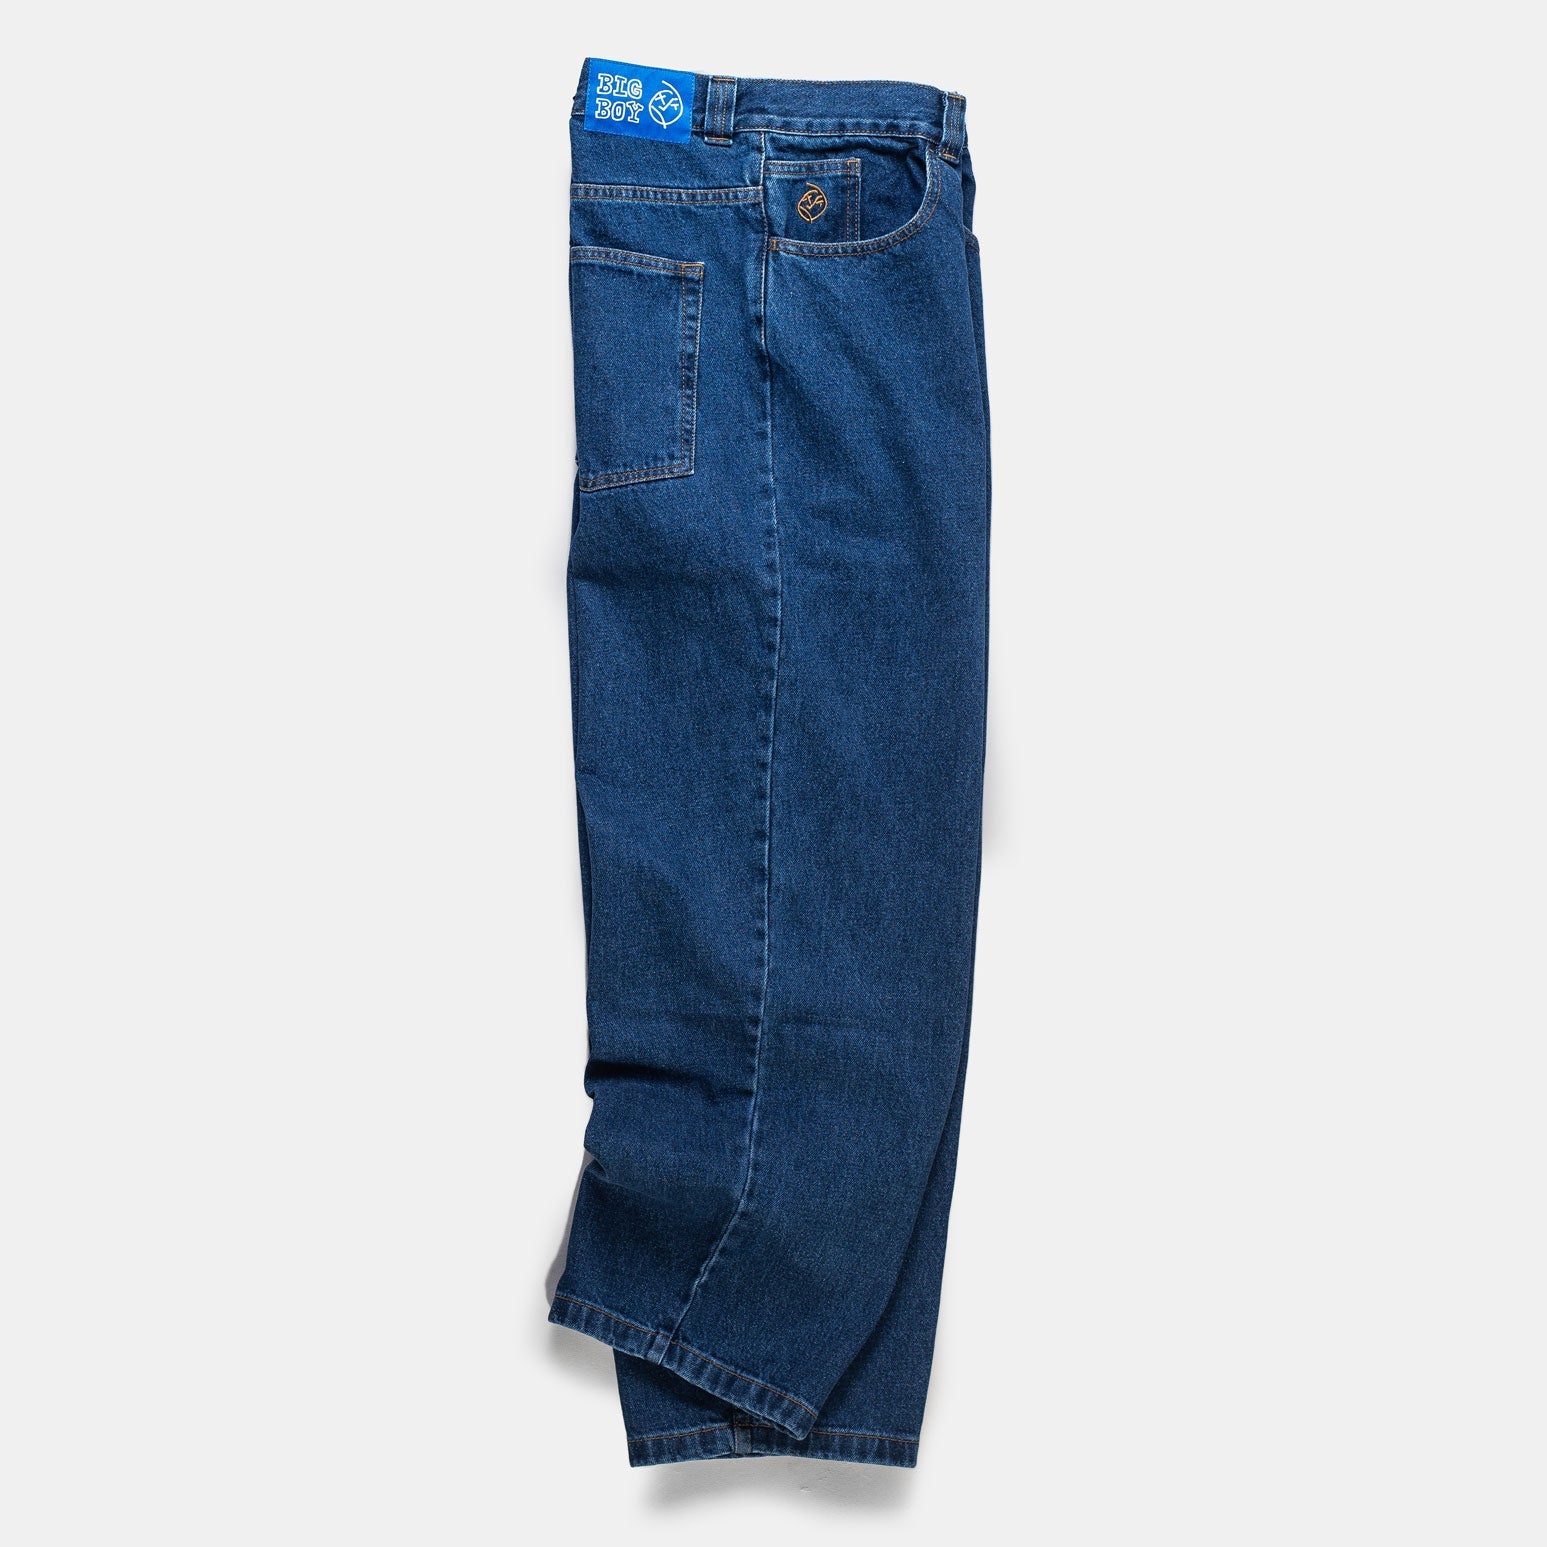 POLAR SKATE co. bigboy jeans Mサイズ - パンツ